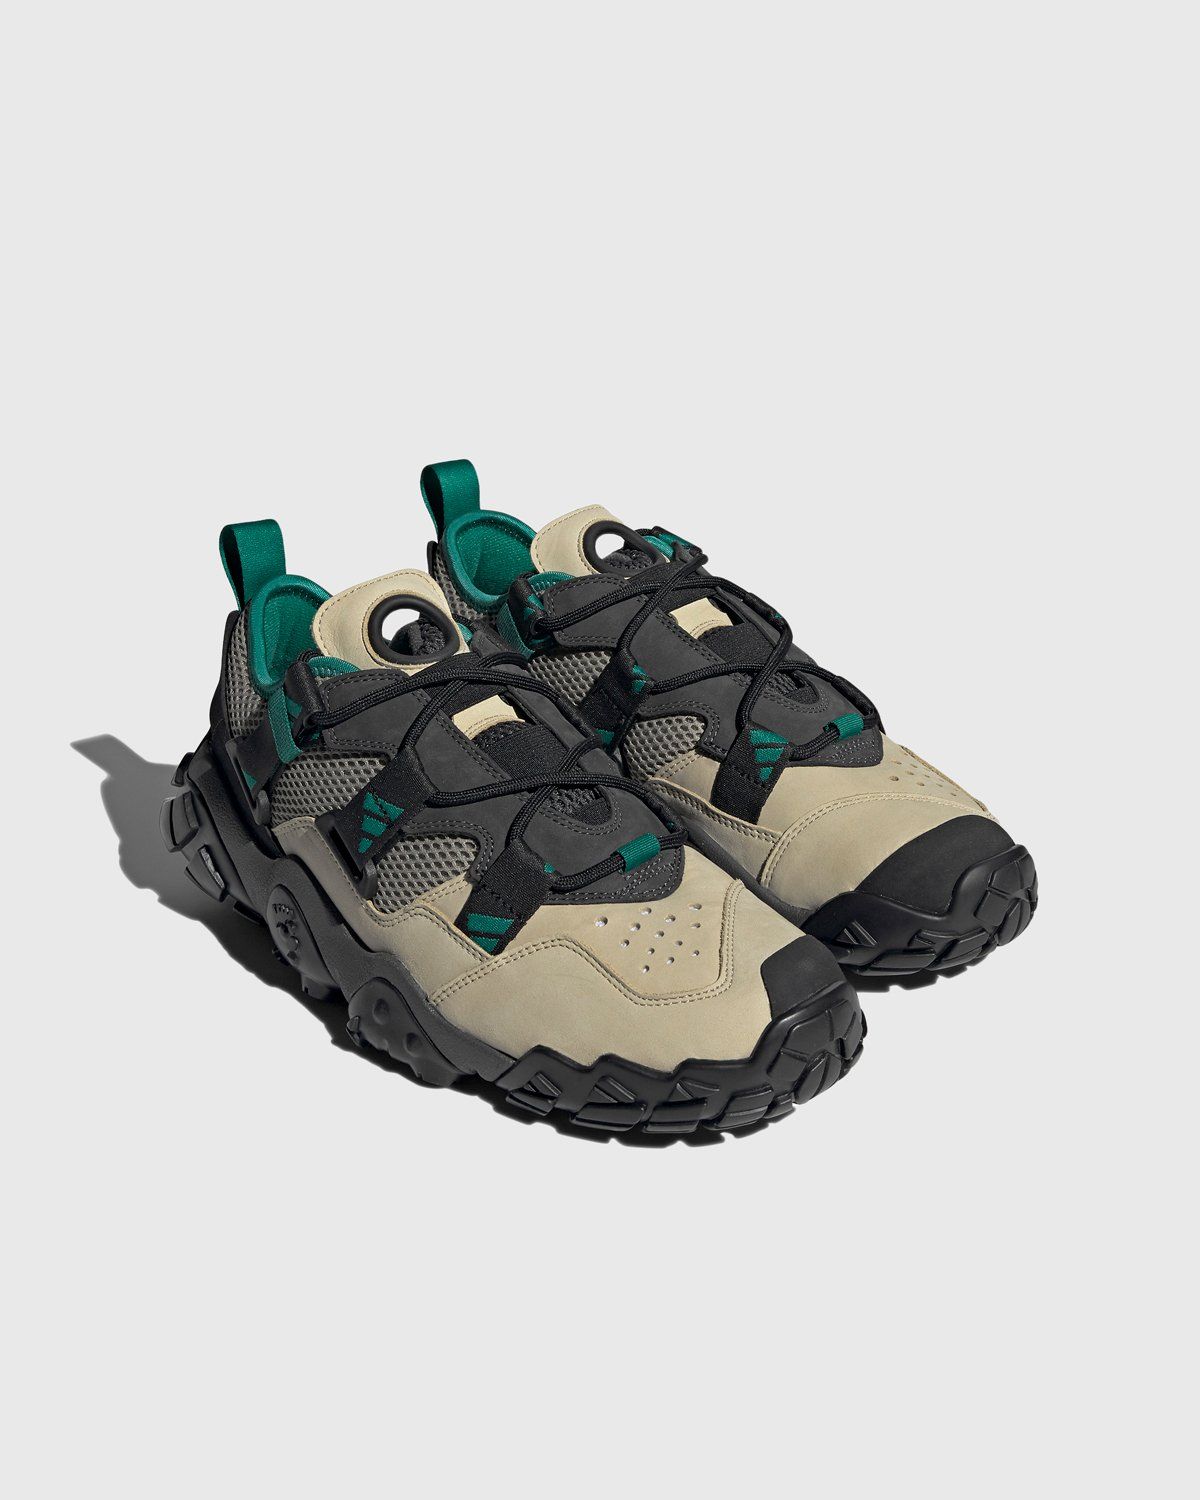 Adidas – FYW XTA Sand/Black/Green - Low Top Sneakers - Multi - Image 2